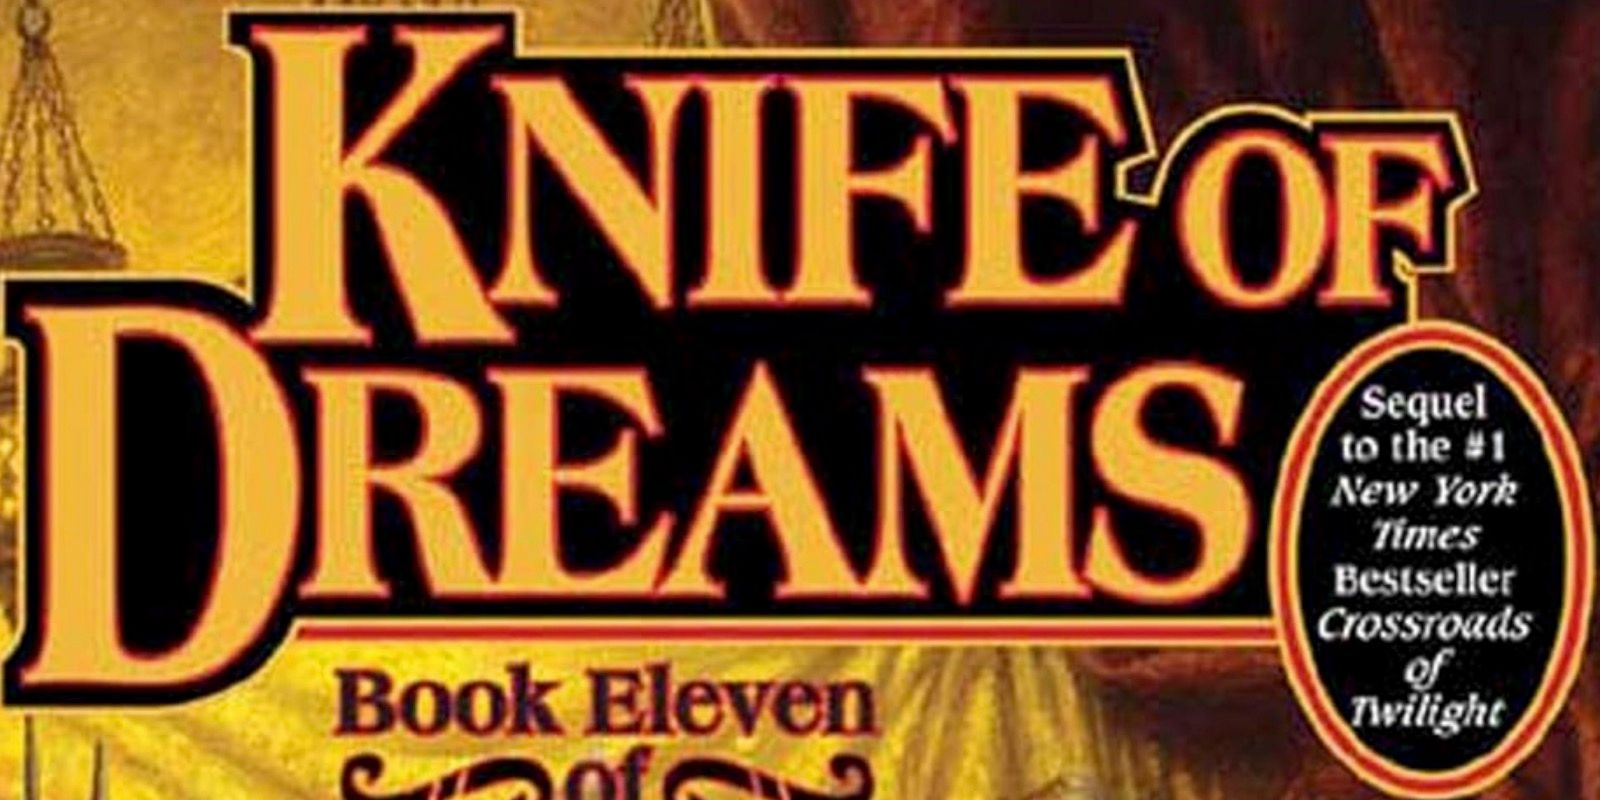 The cover of Knife of Dreams by Robert Jordan.